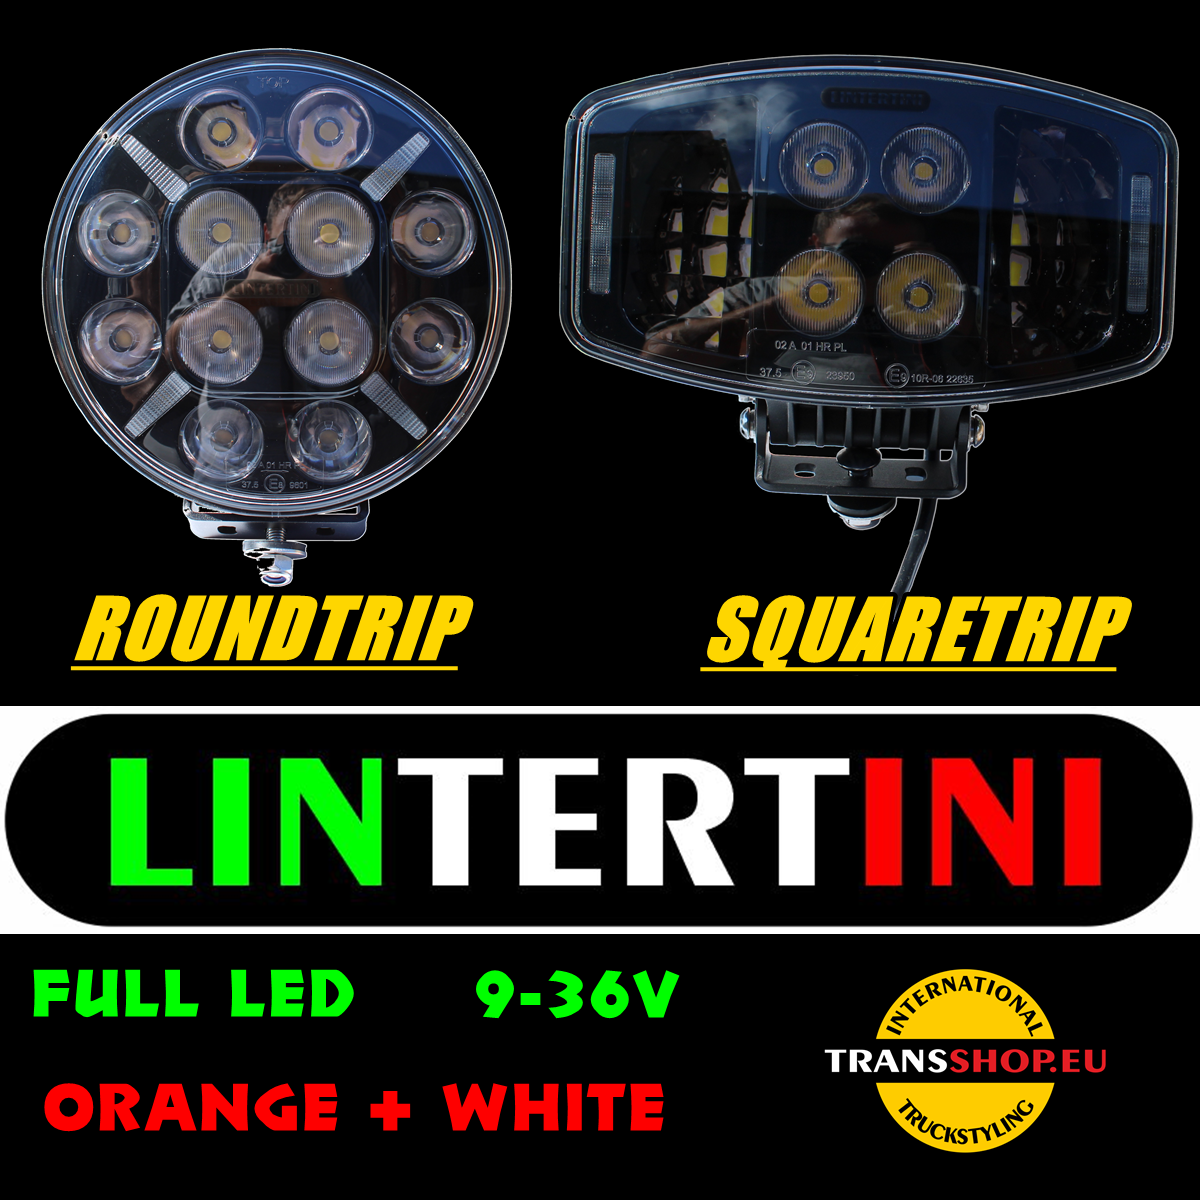 New from Lintertini - LED long-range halogens with orange positioning.